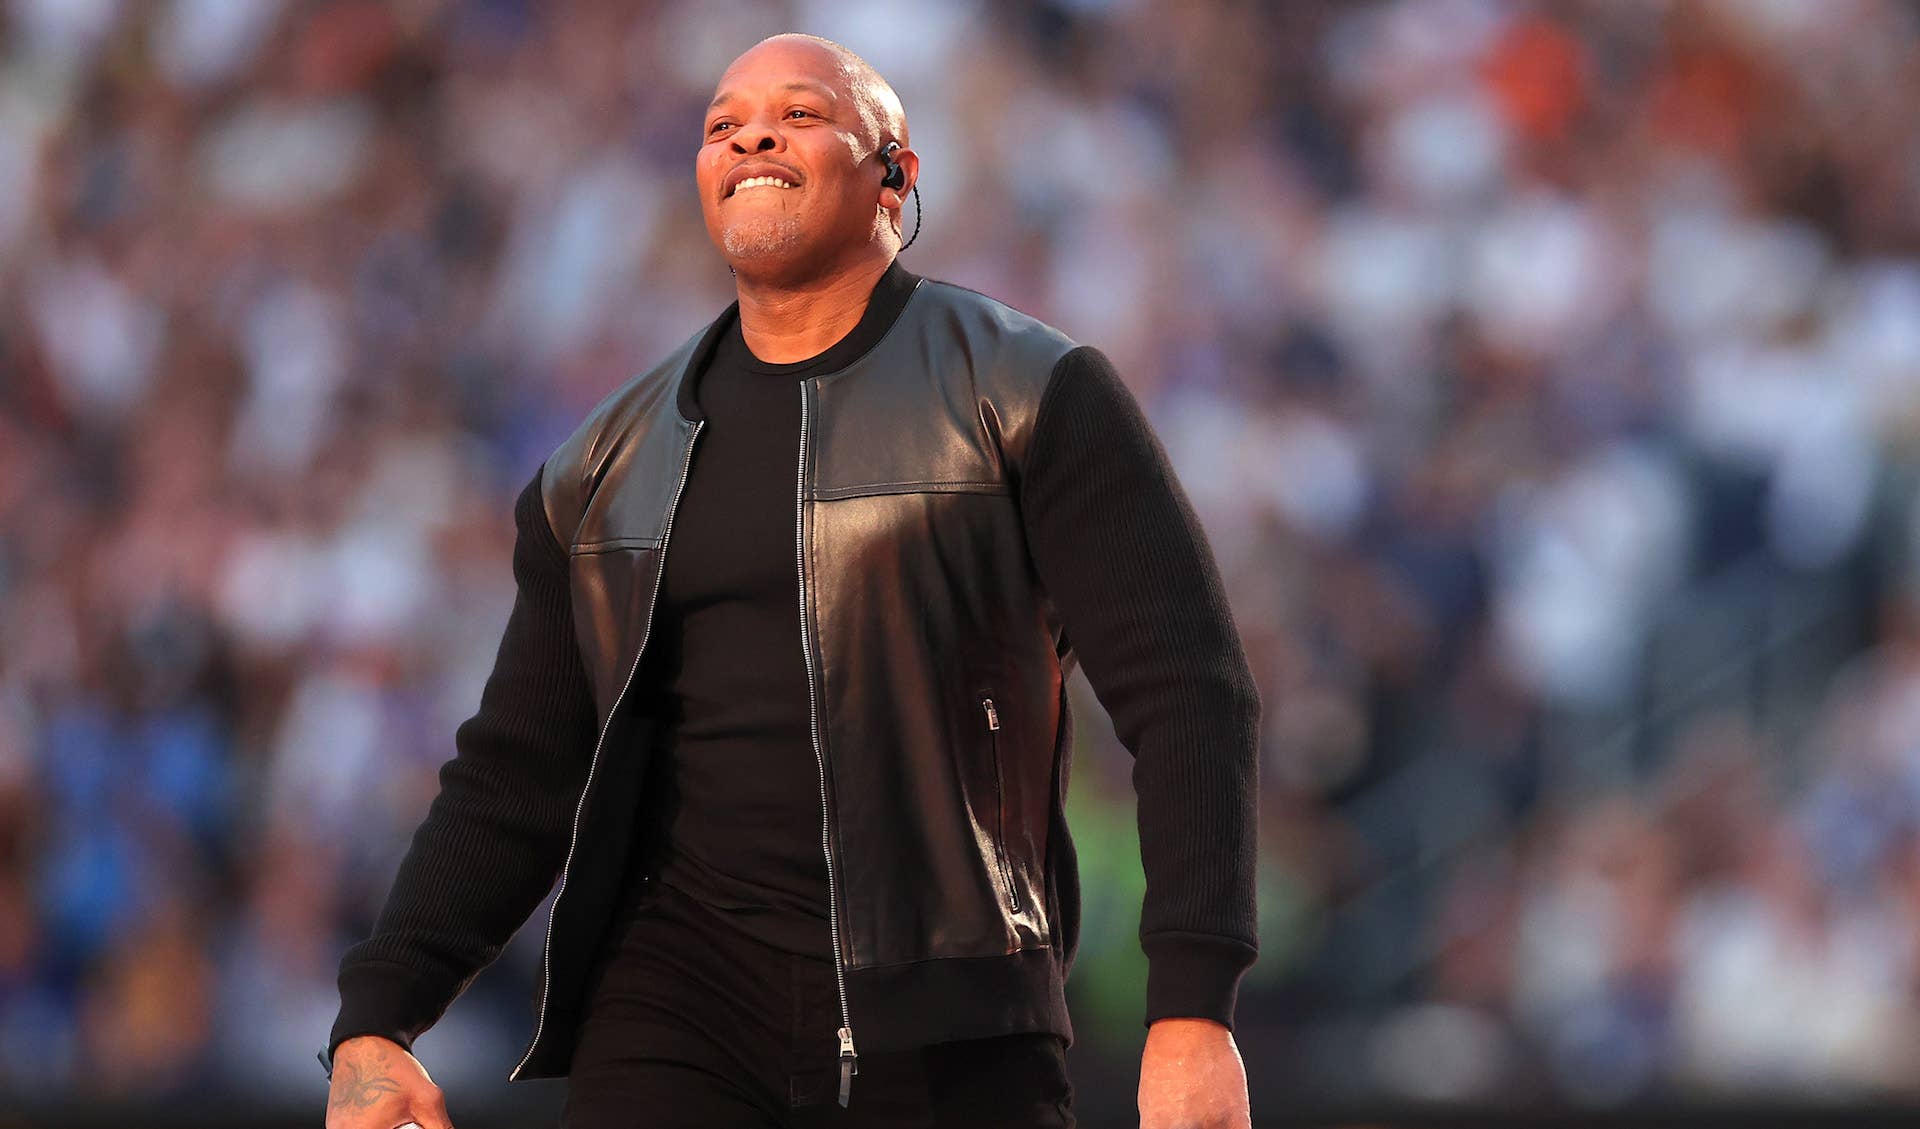 Dr. Dre performs onstage at the Super Bowl LVI Halftime Show